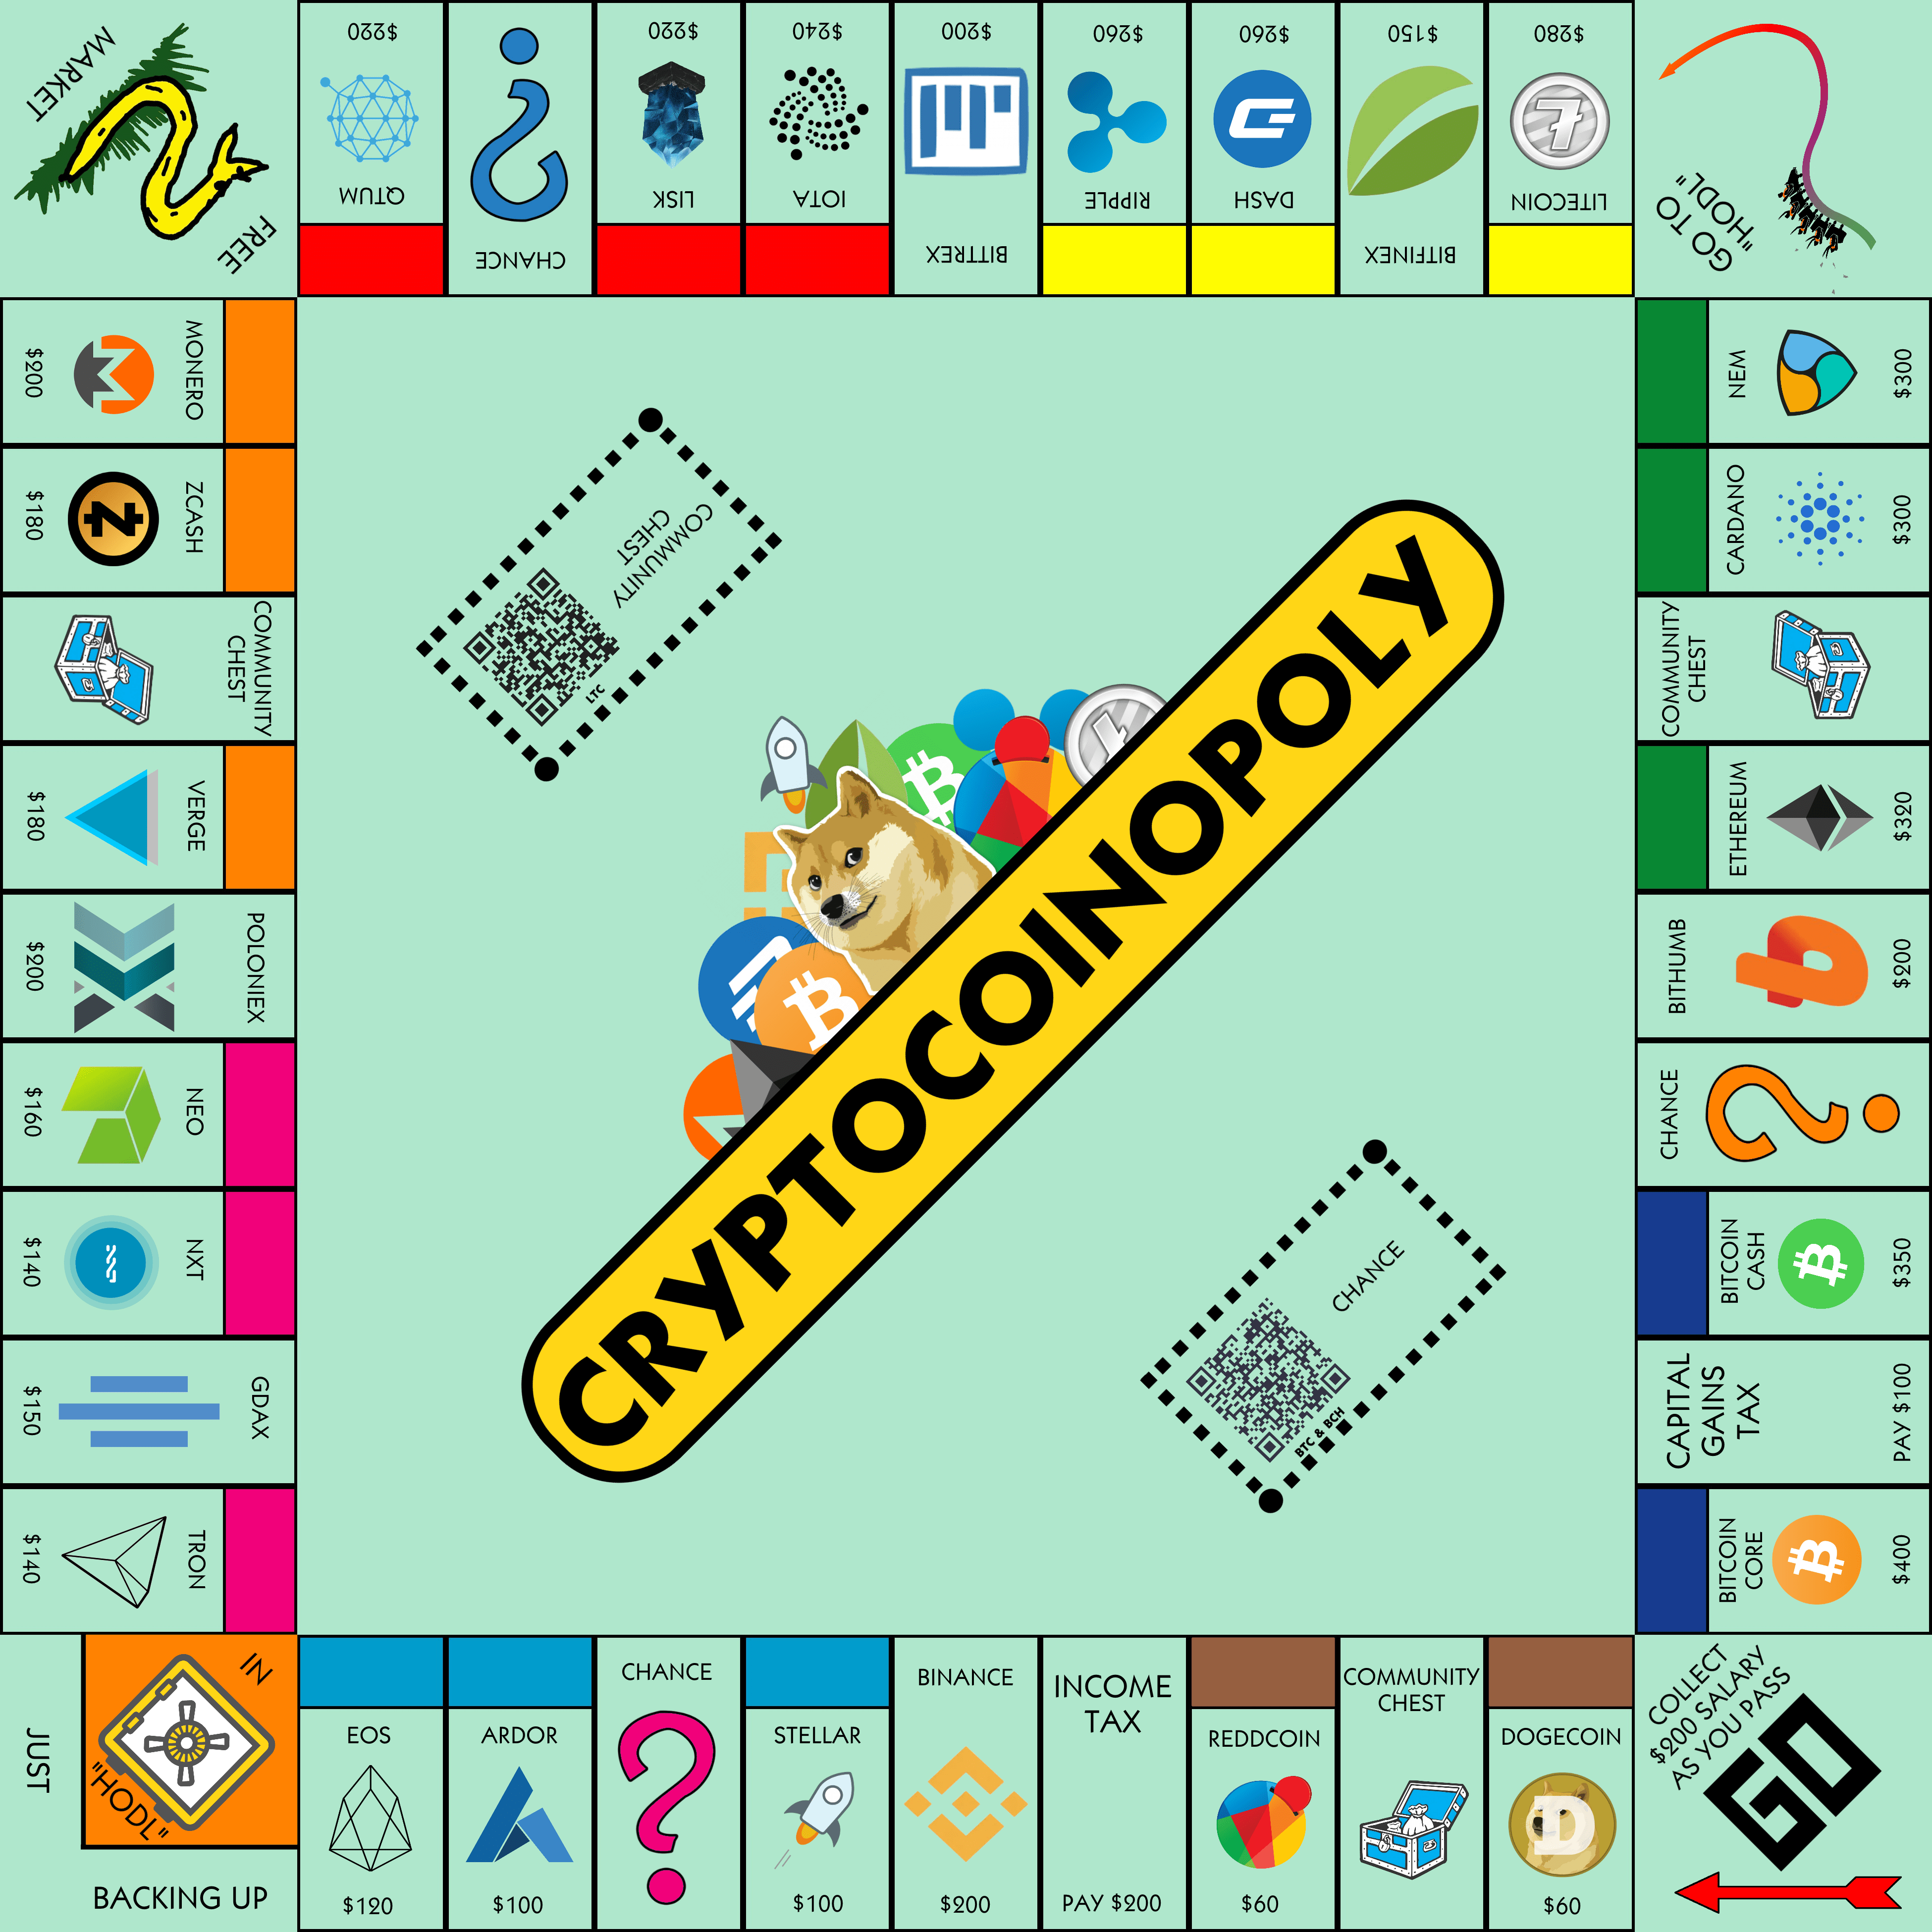 Cryptocoinopoly, le Monopoly version cryptomonnaie